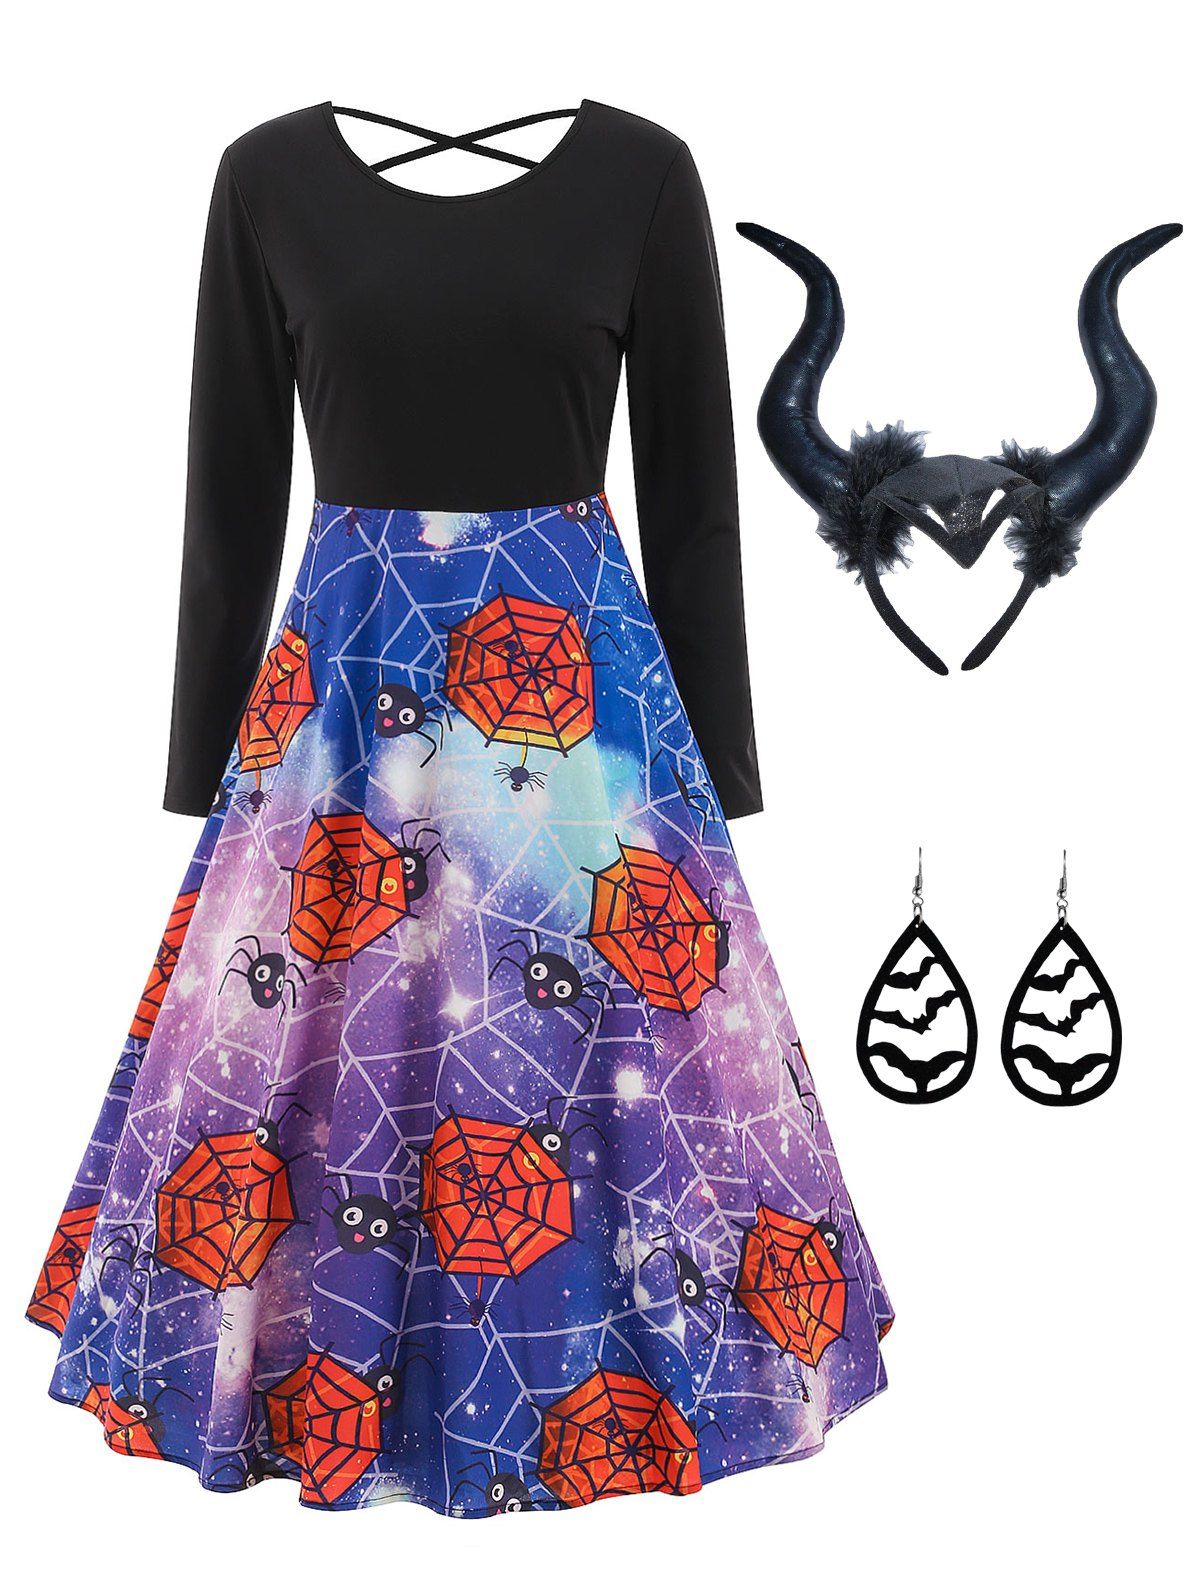 Galaxy Spider Web Print Crisscross Dress And Devil Horns Headband Bat Earrings Halloween Outfit - multicolor S